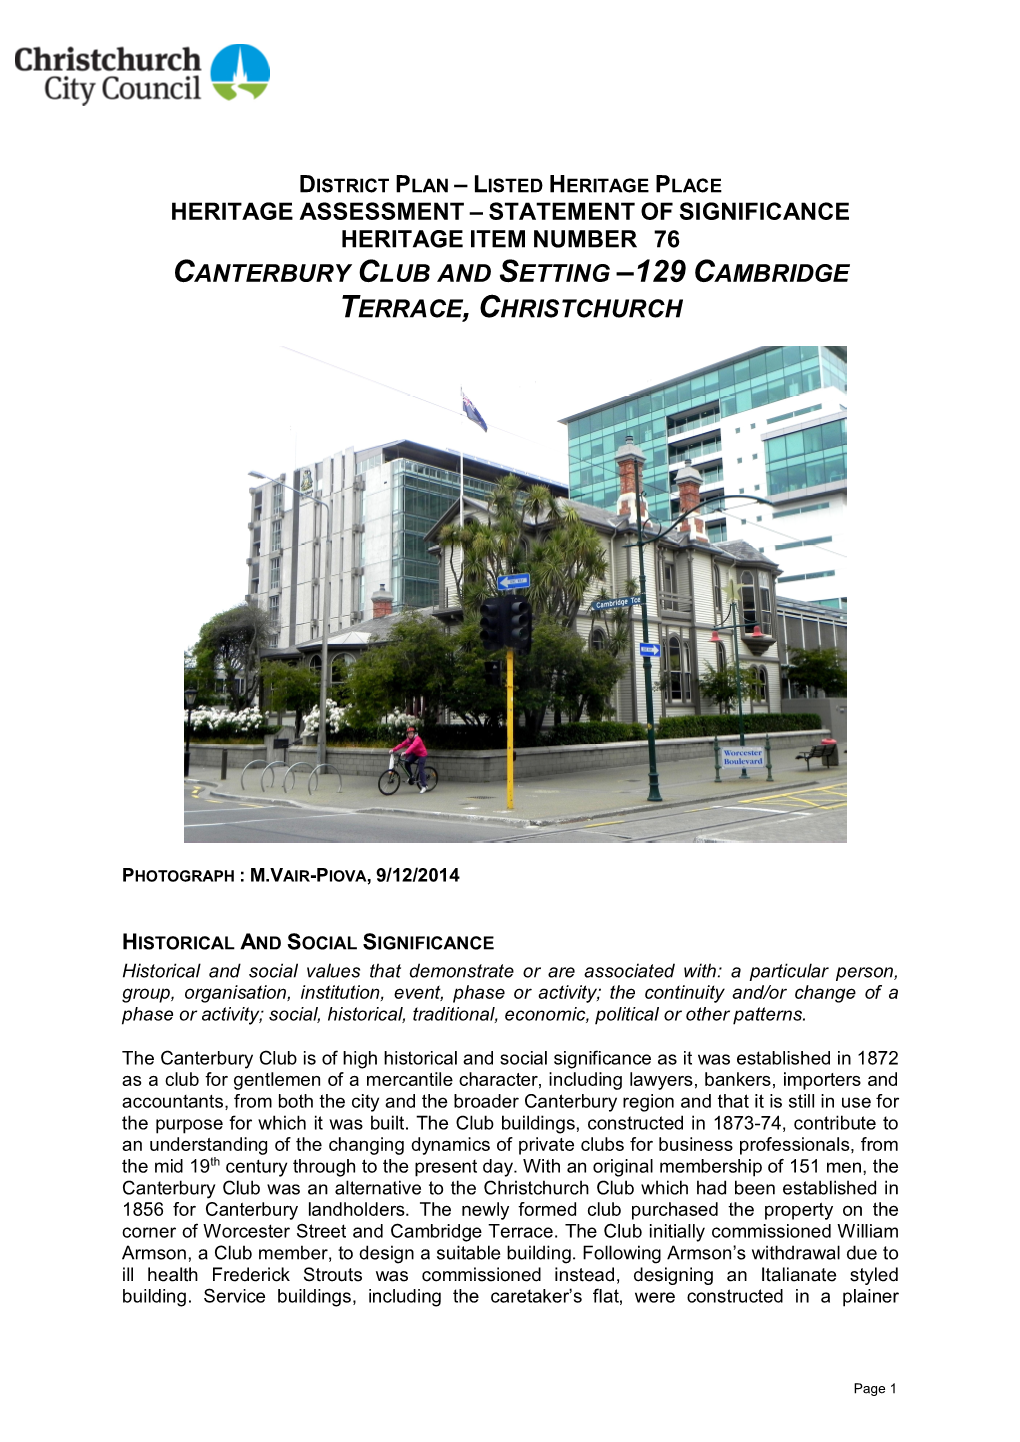 Canterbury Club and Setting –129 Cambridge Terrace,Christchurch